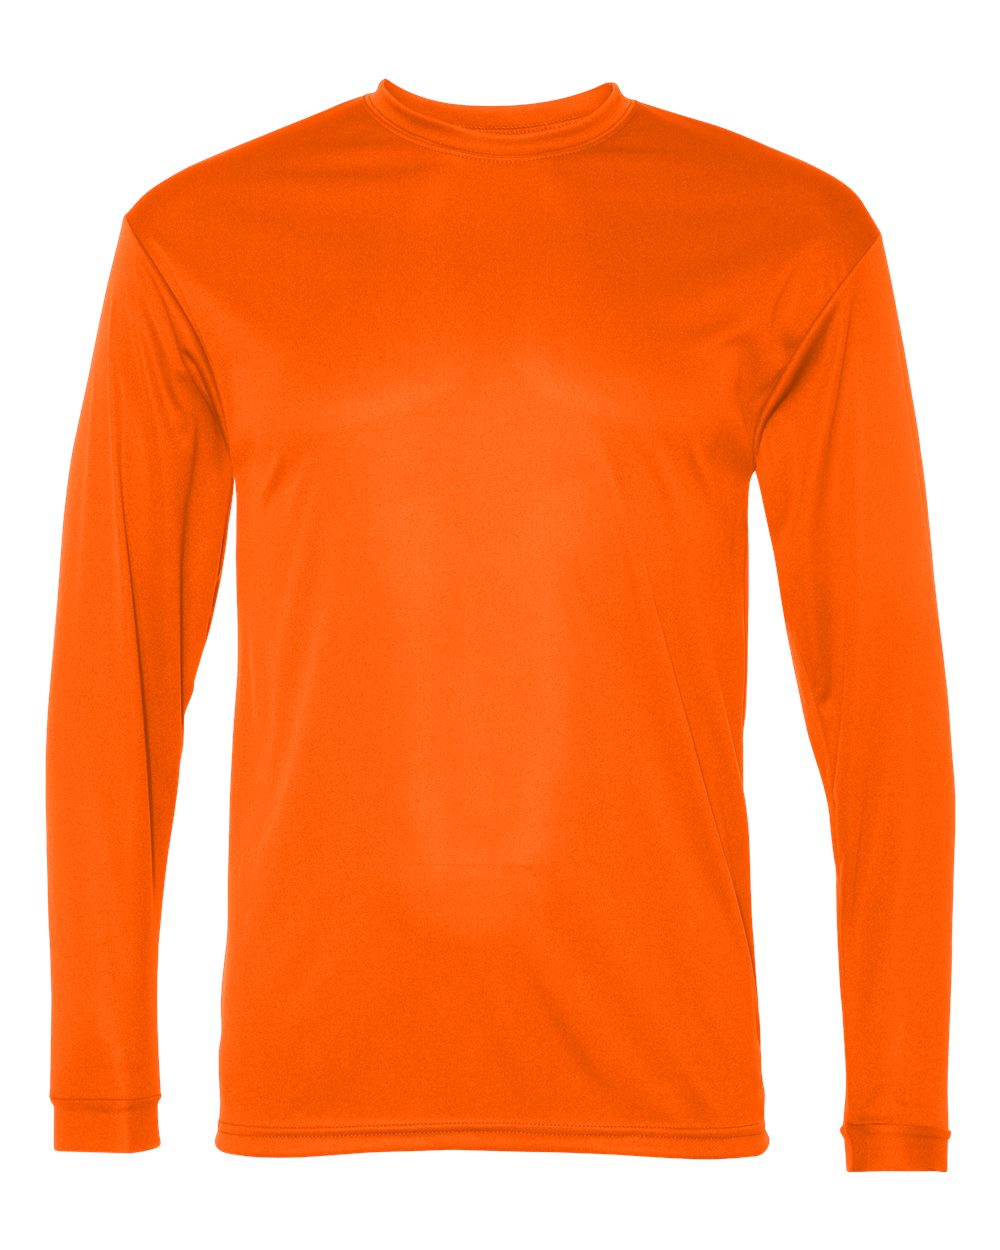 C2 Sport 5104 Performance Shirt :: Safety Orange, Size XL